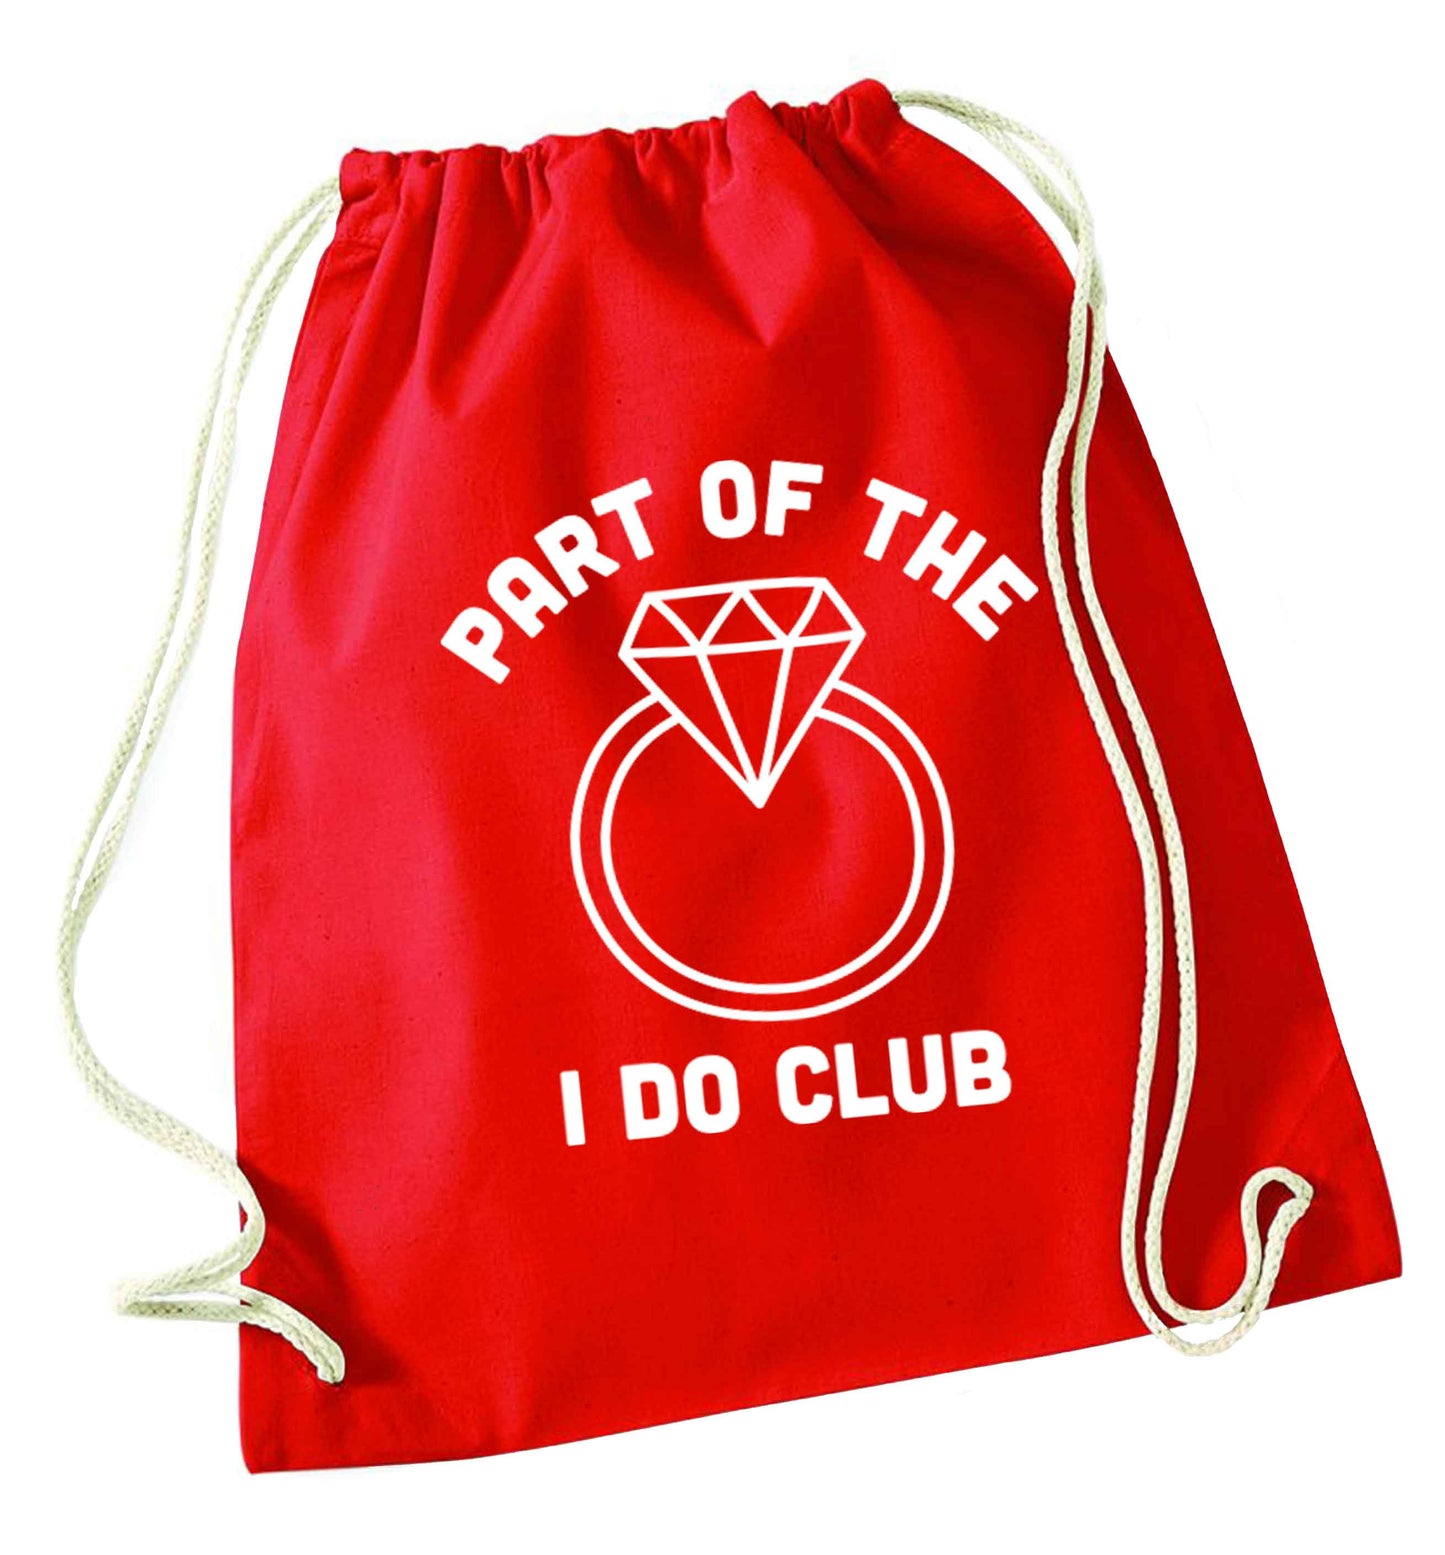 Part of the I do club red drawstring bag 